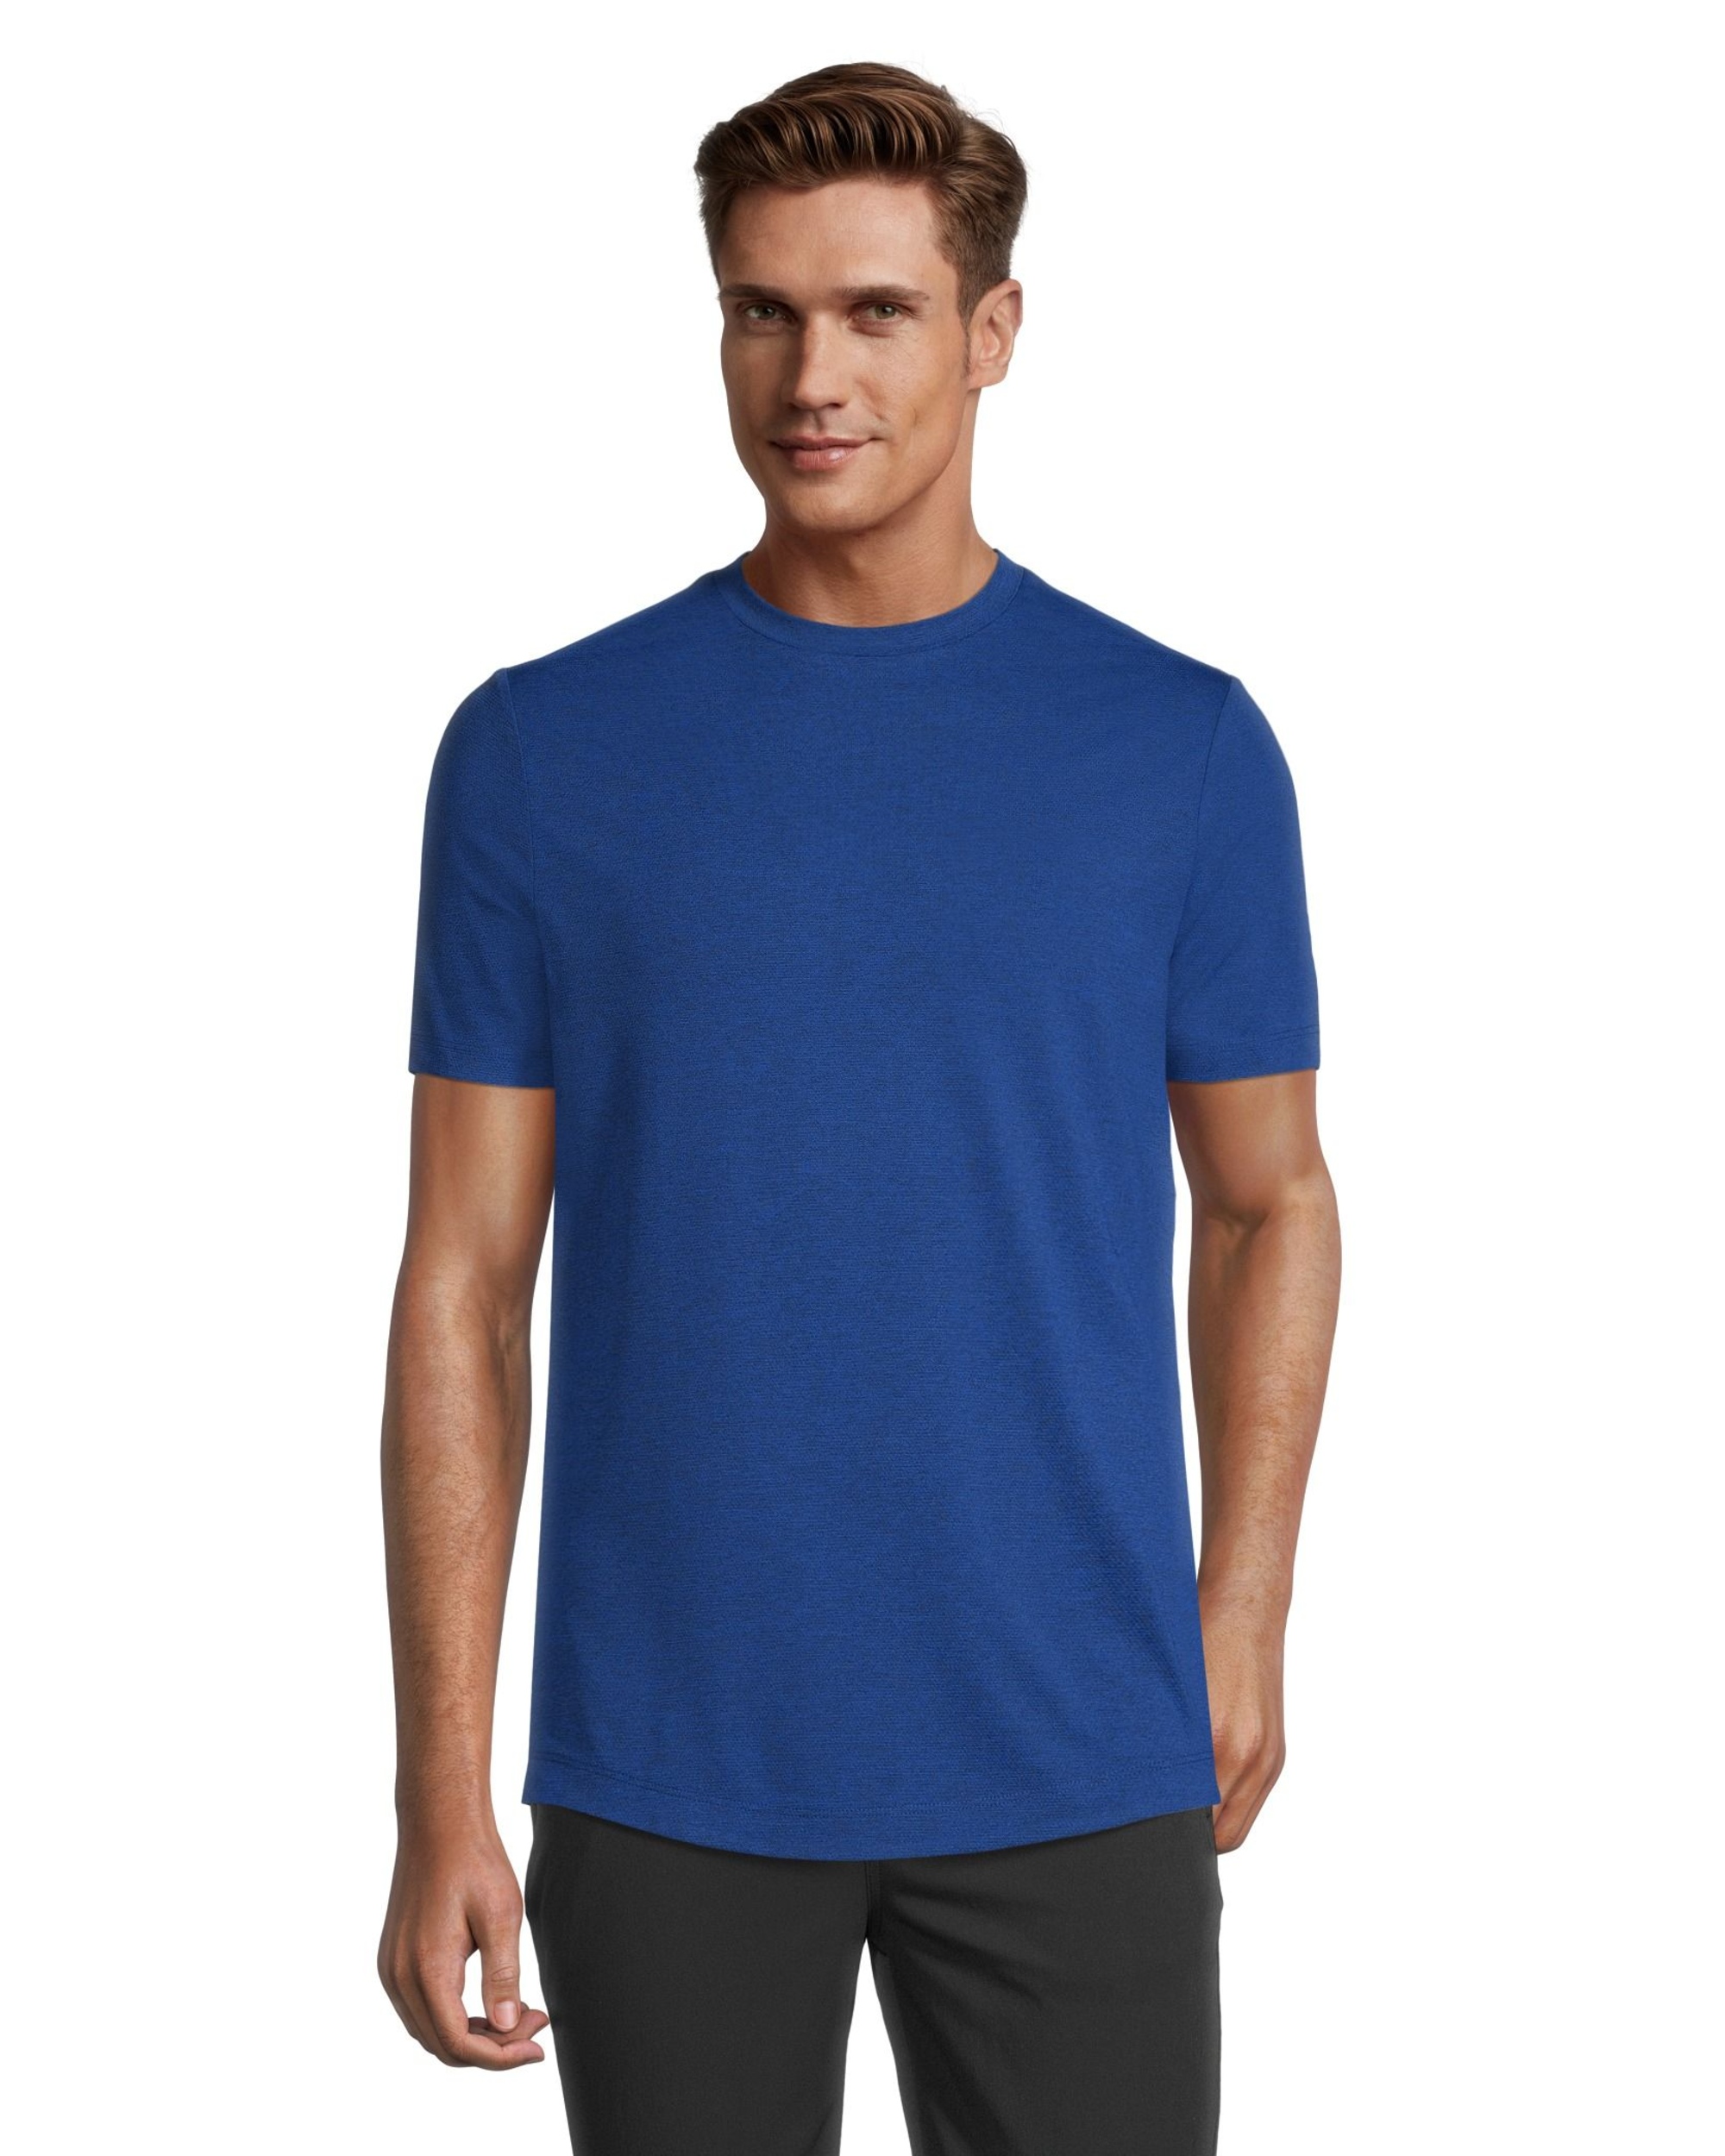 Men's Perforated FreshTech Stretch Mesh T Shirt | Marks